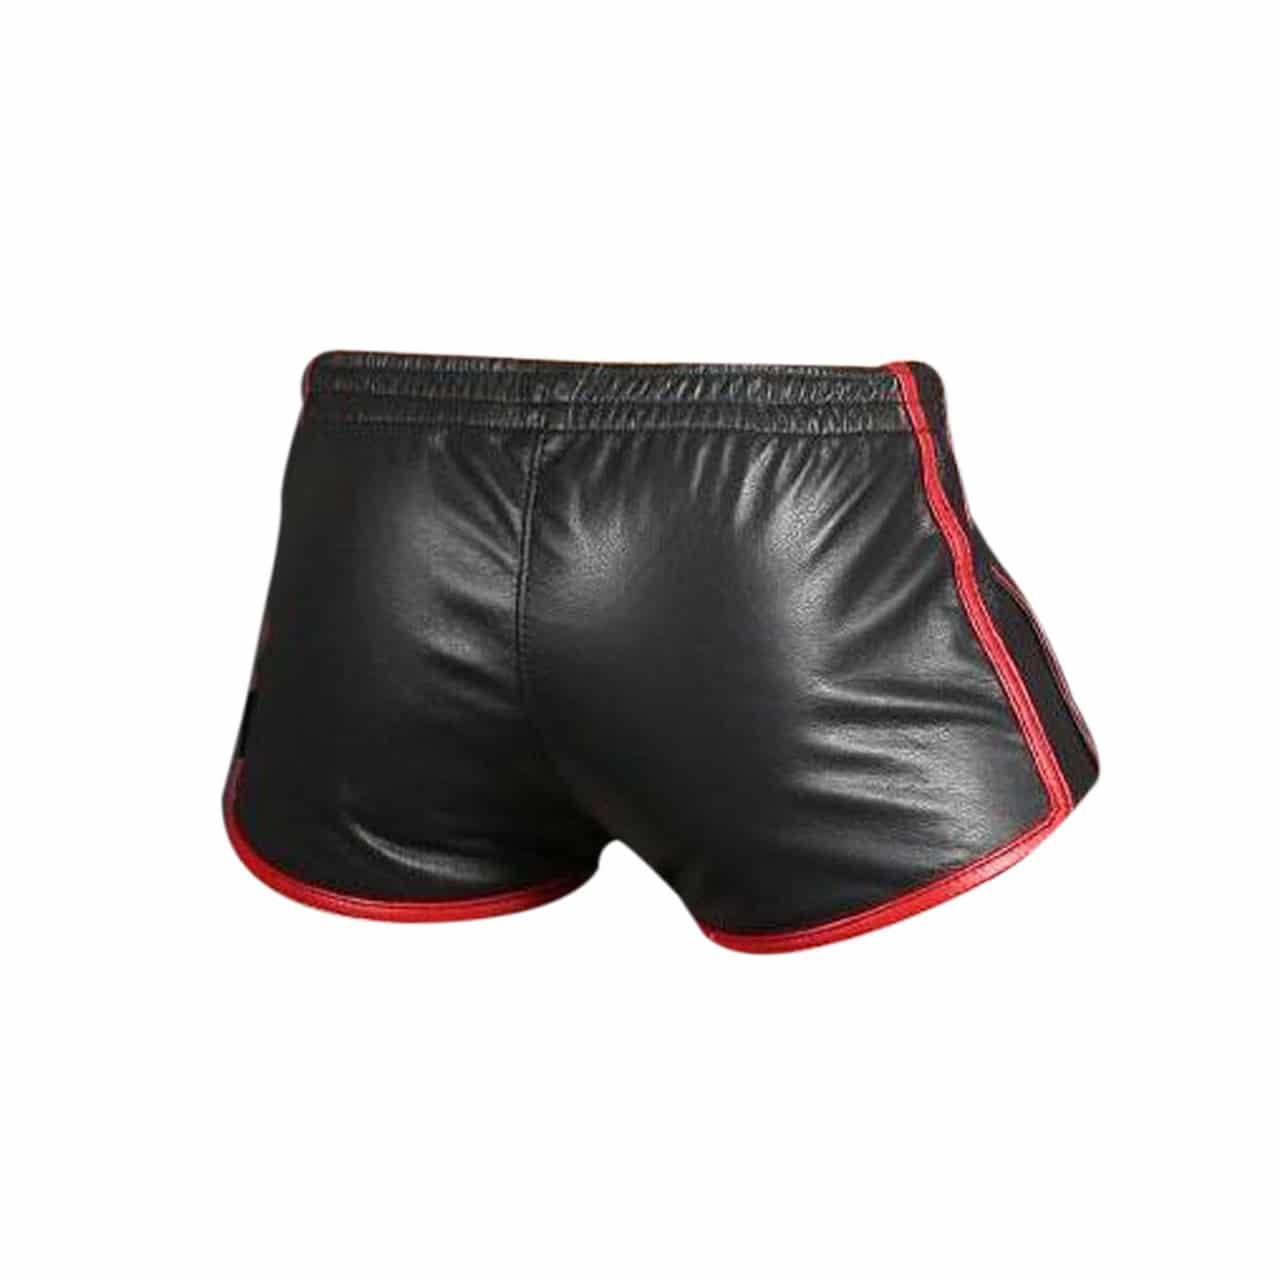 Mens Gym Boxer Sports Shorts Black Soft Sheep Lamb Leather - SHORTS6